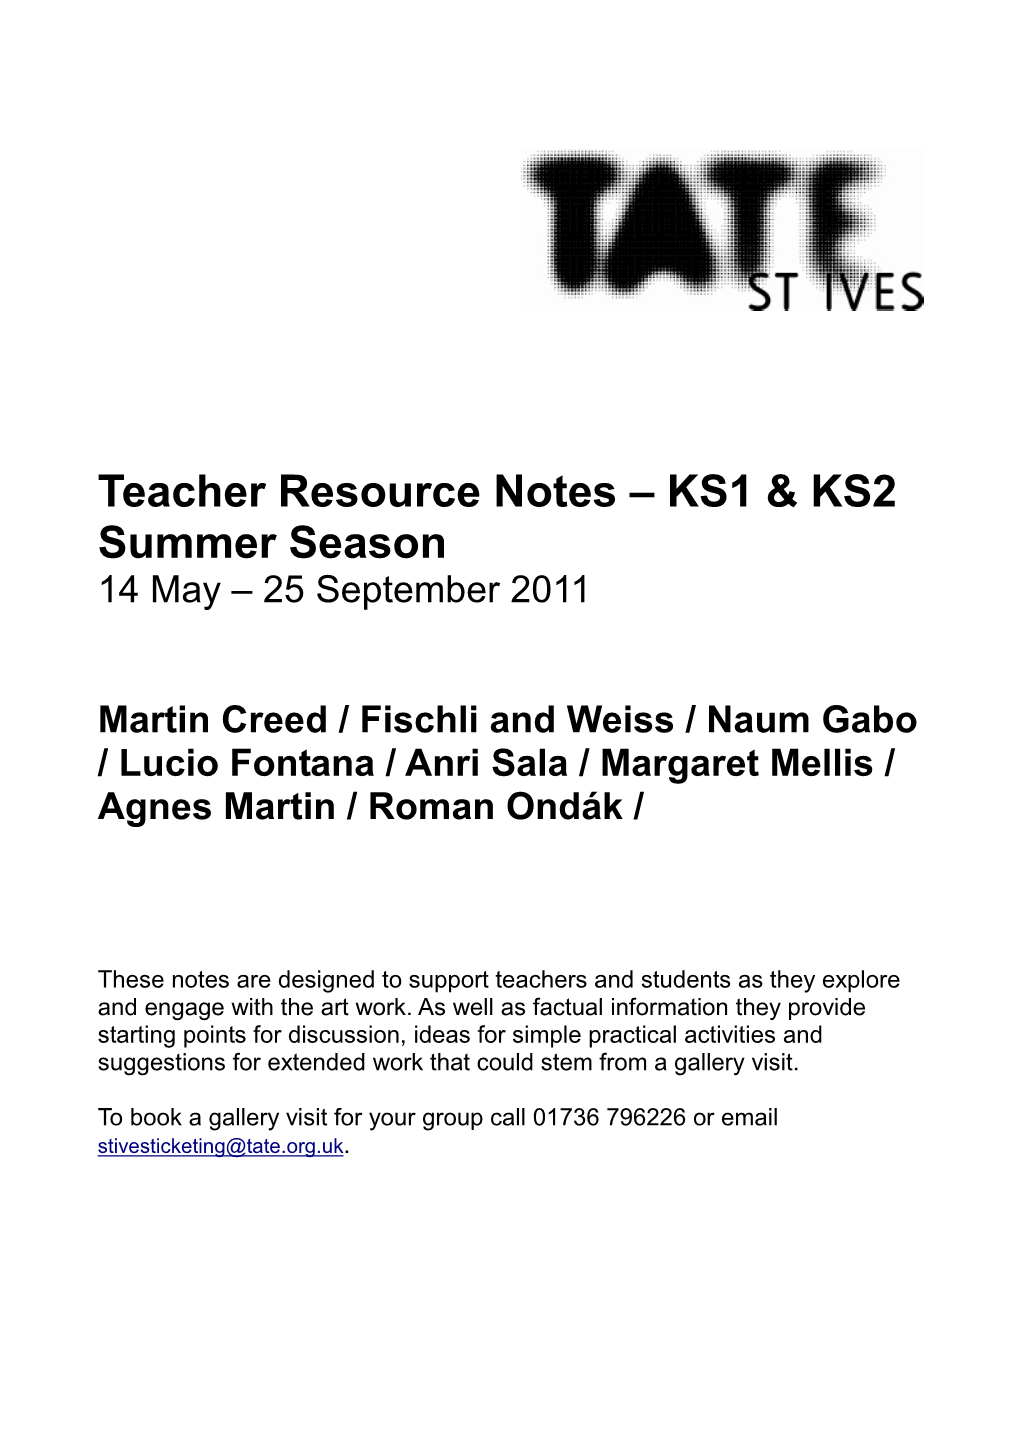 Teacher Resource Notes – KS1 & KS2 Summer Season